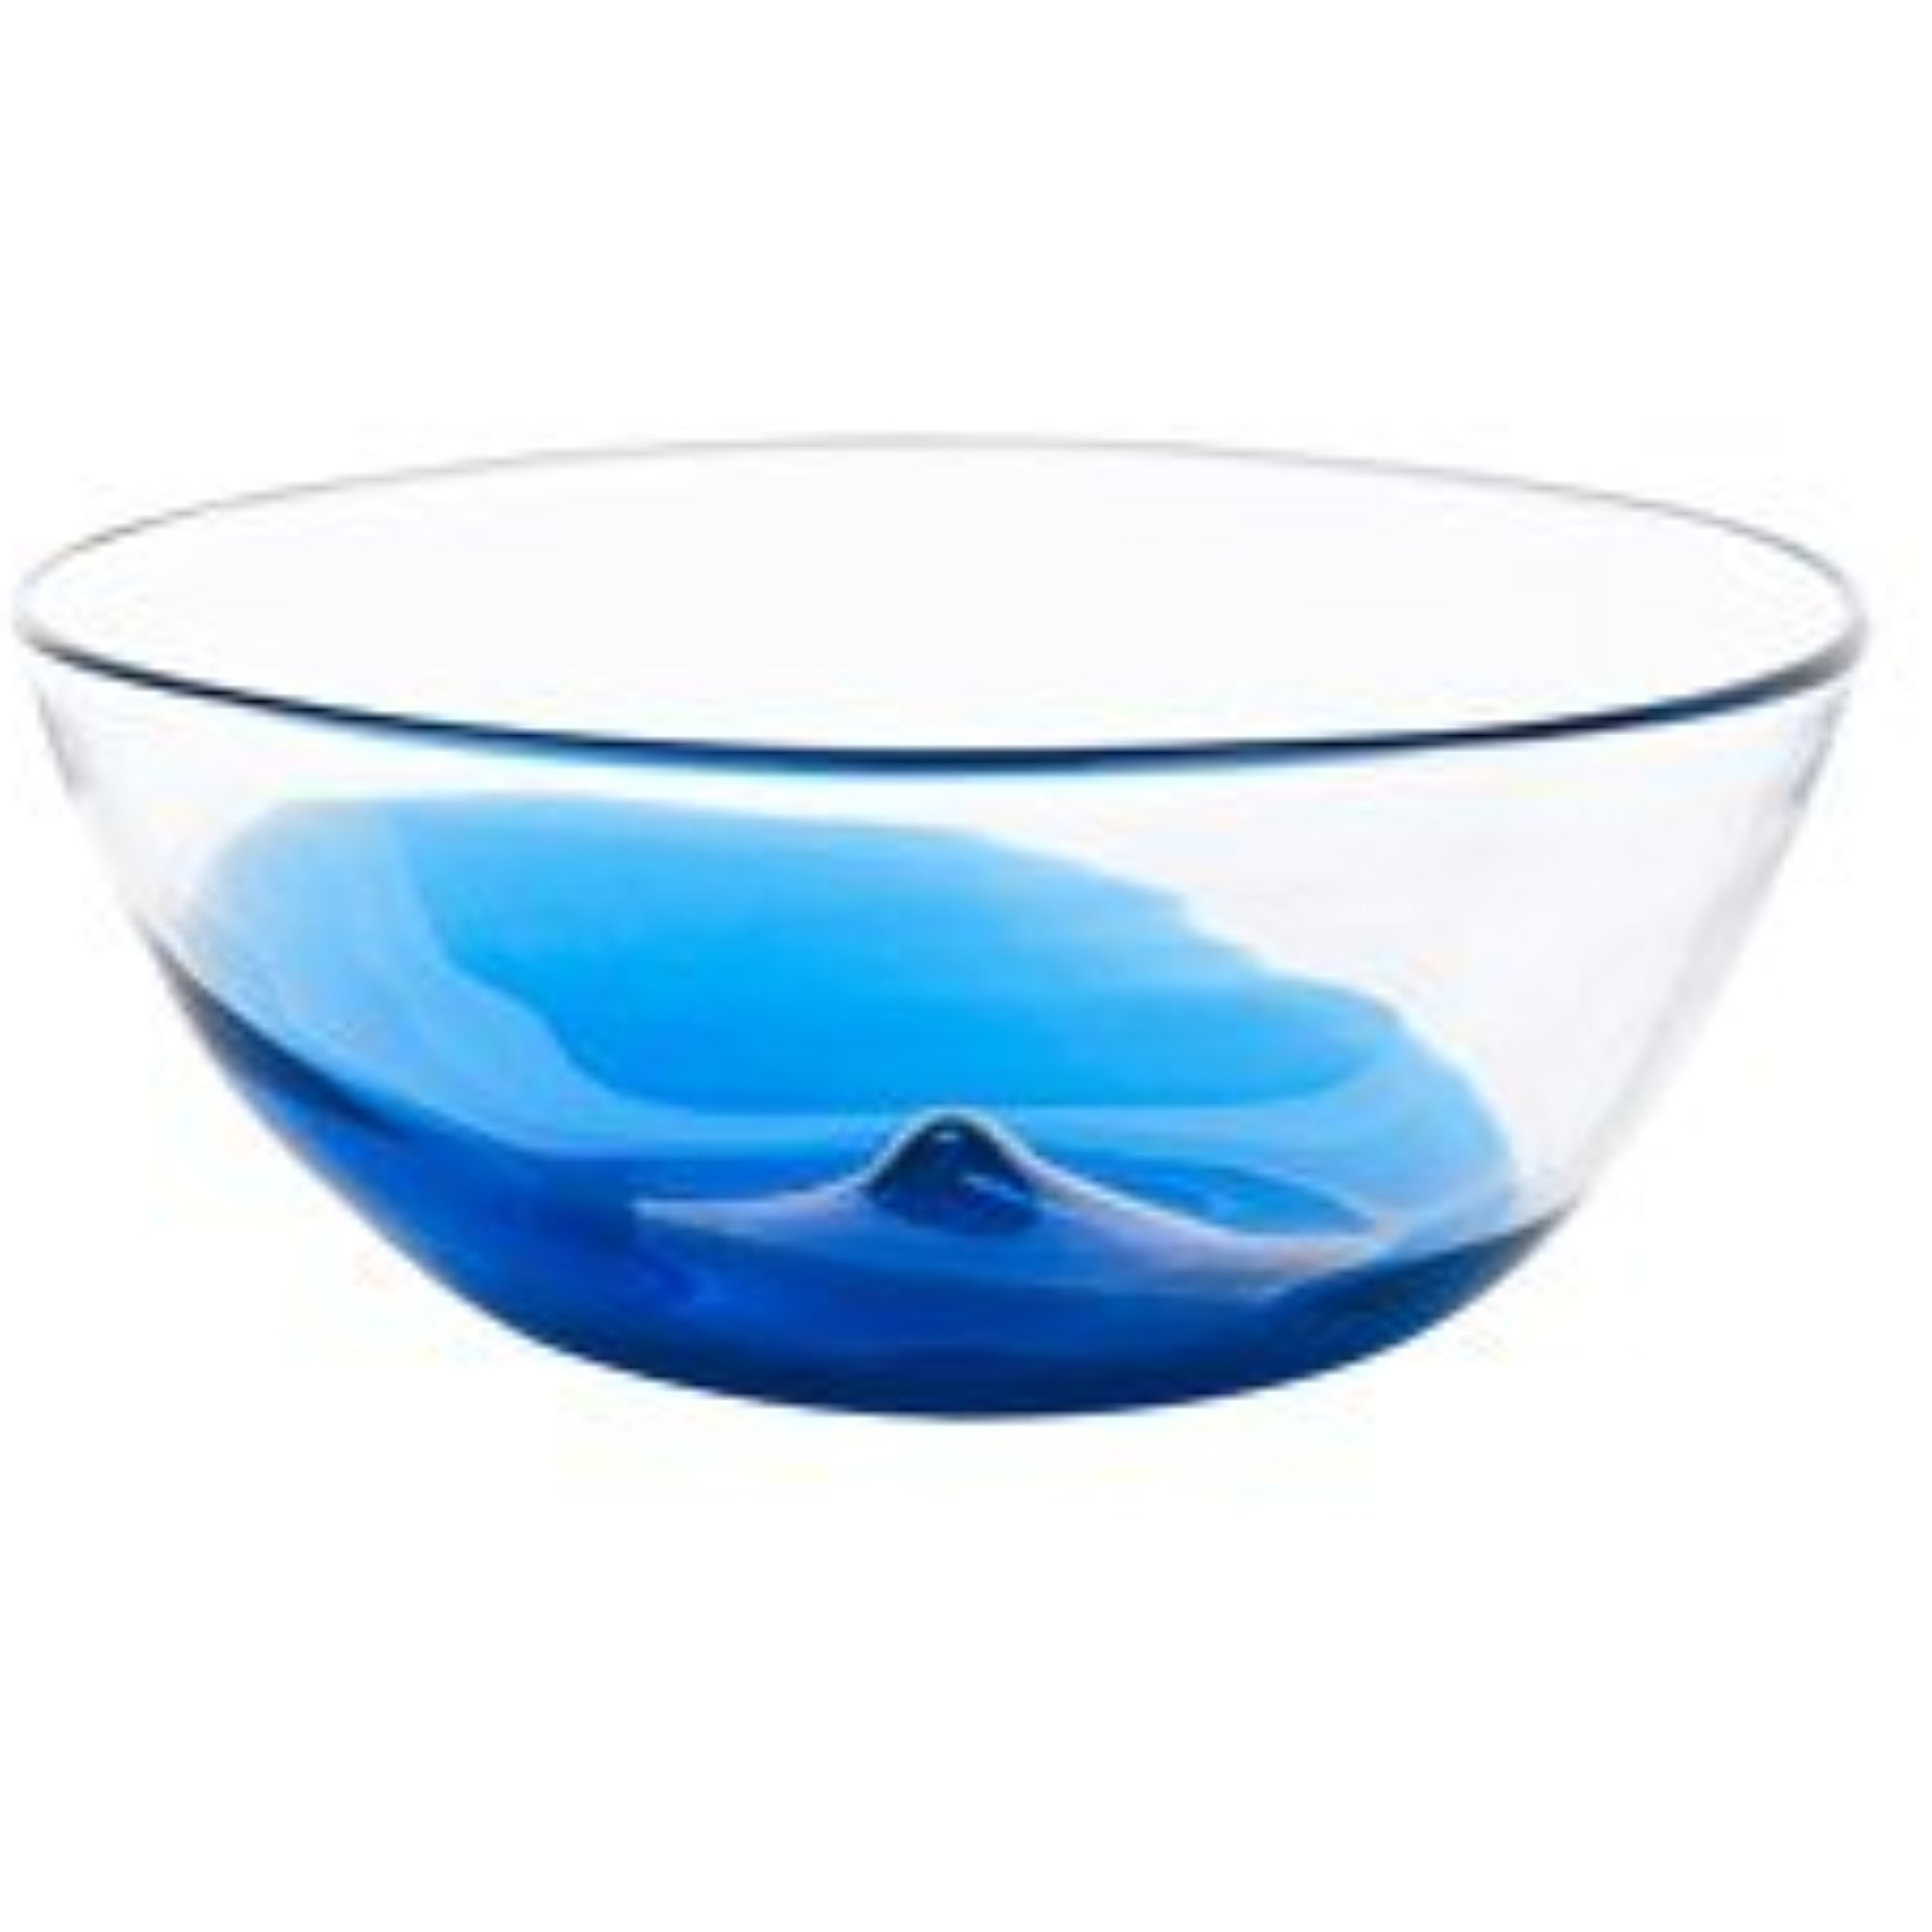 SÄLLSKAPLIG Bowl with lid, clear glass/patterned, 4 - IKEA